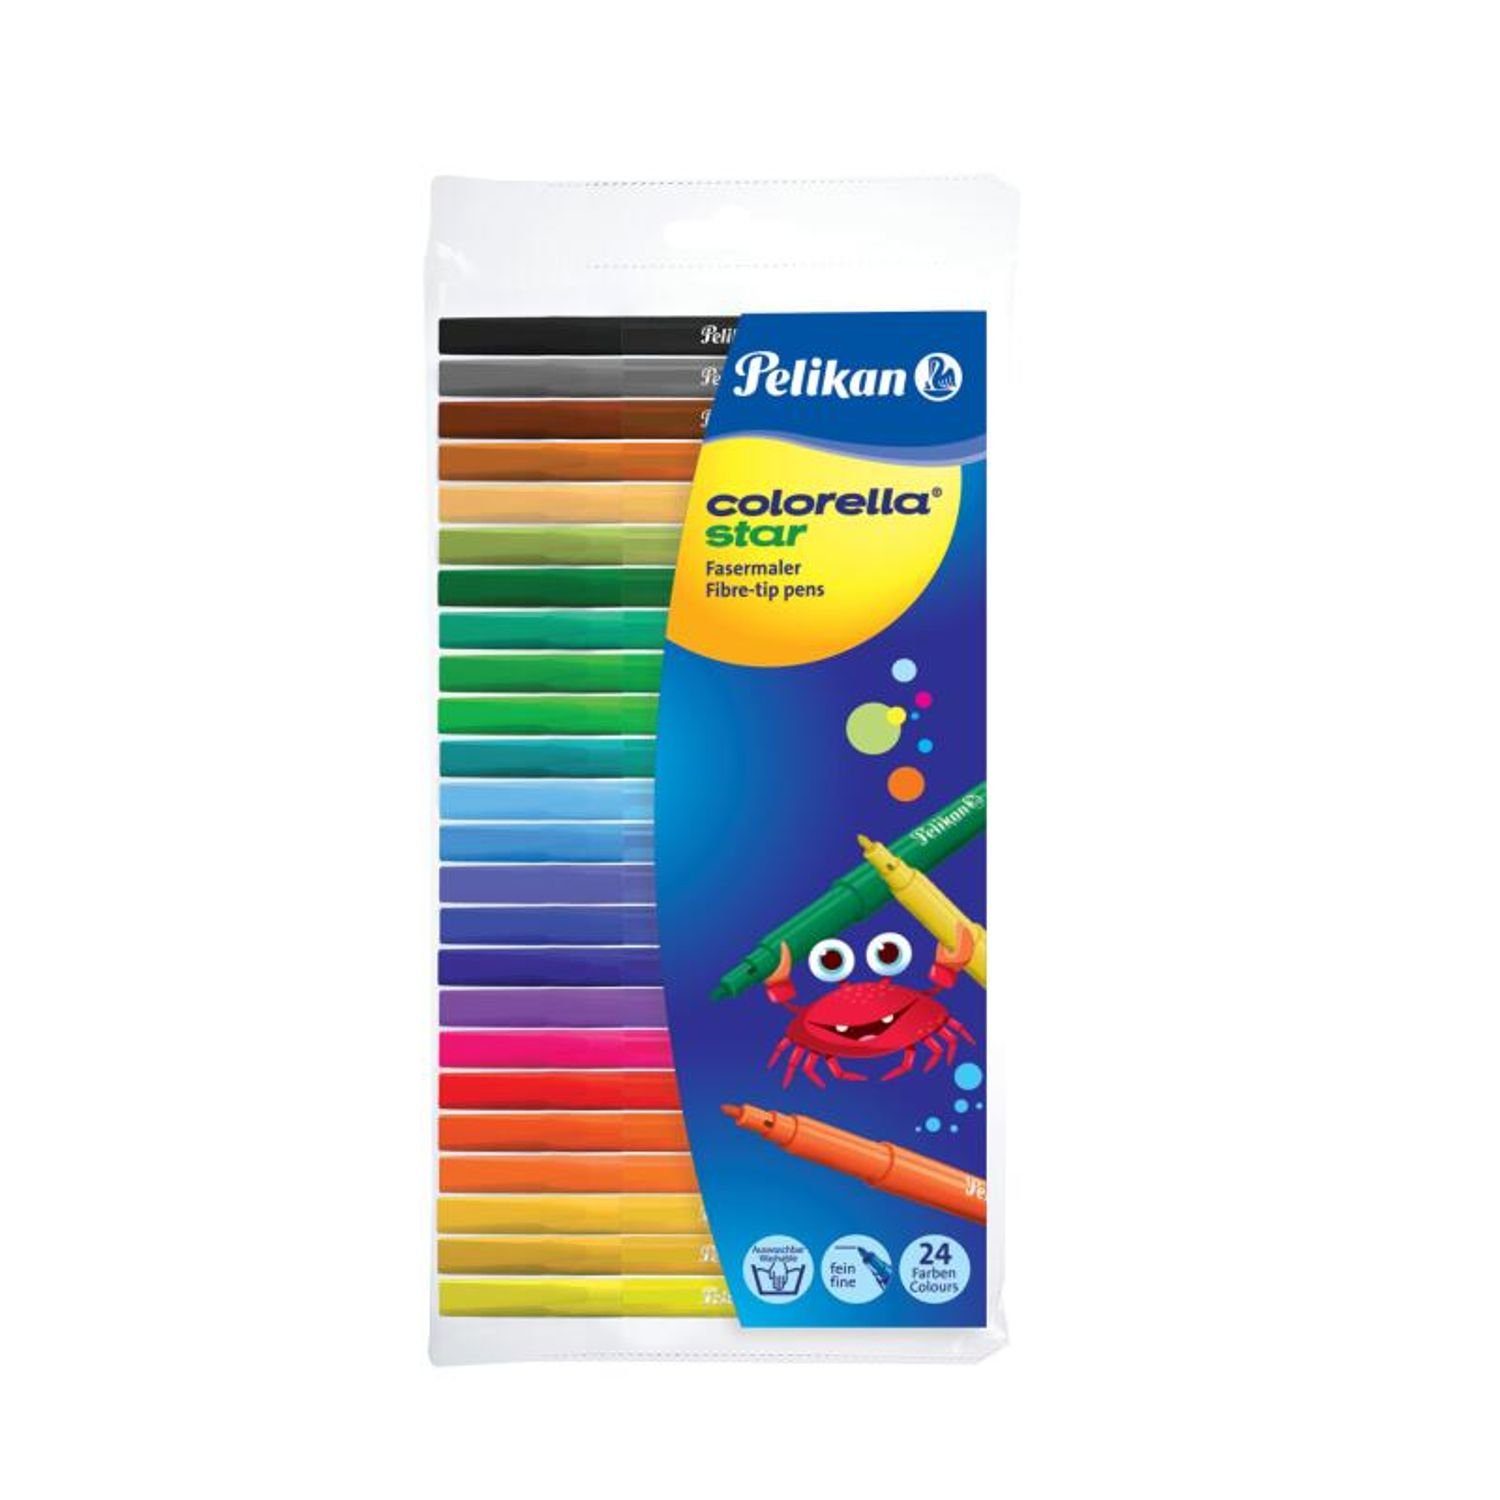 Colorella Filzstift Büro Faserstifte Pelikan 10x Farben Zeichnen Pelikan Filzmaler 24er